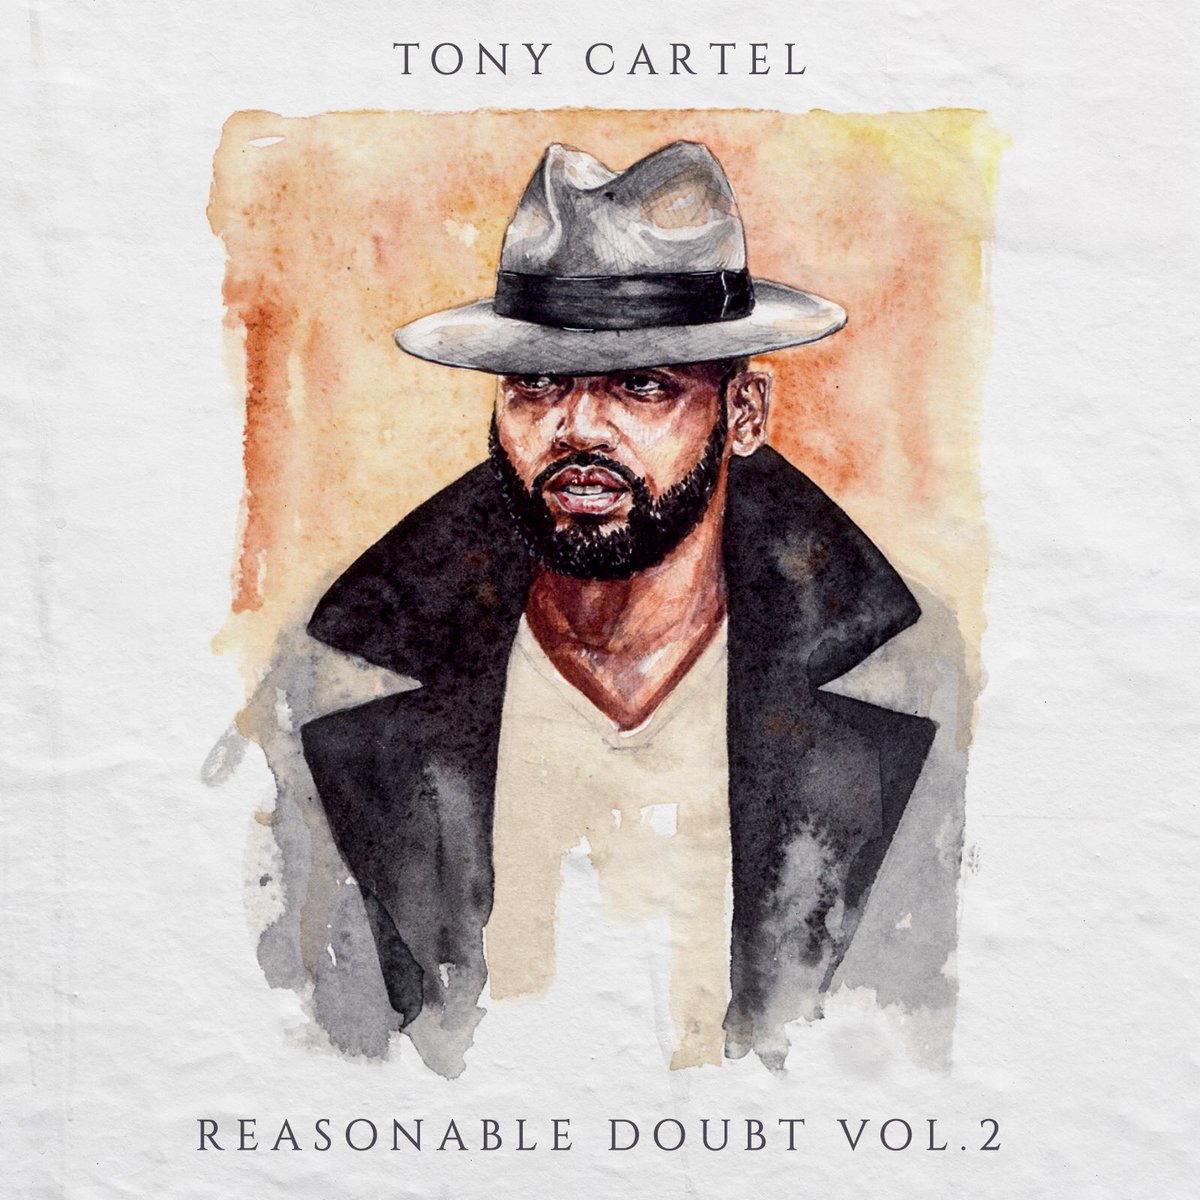 Tony Cartel - Reasonable Doubt Vol. 2 (Album Stream)